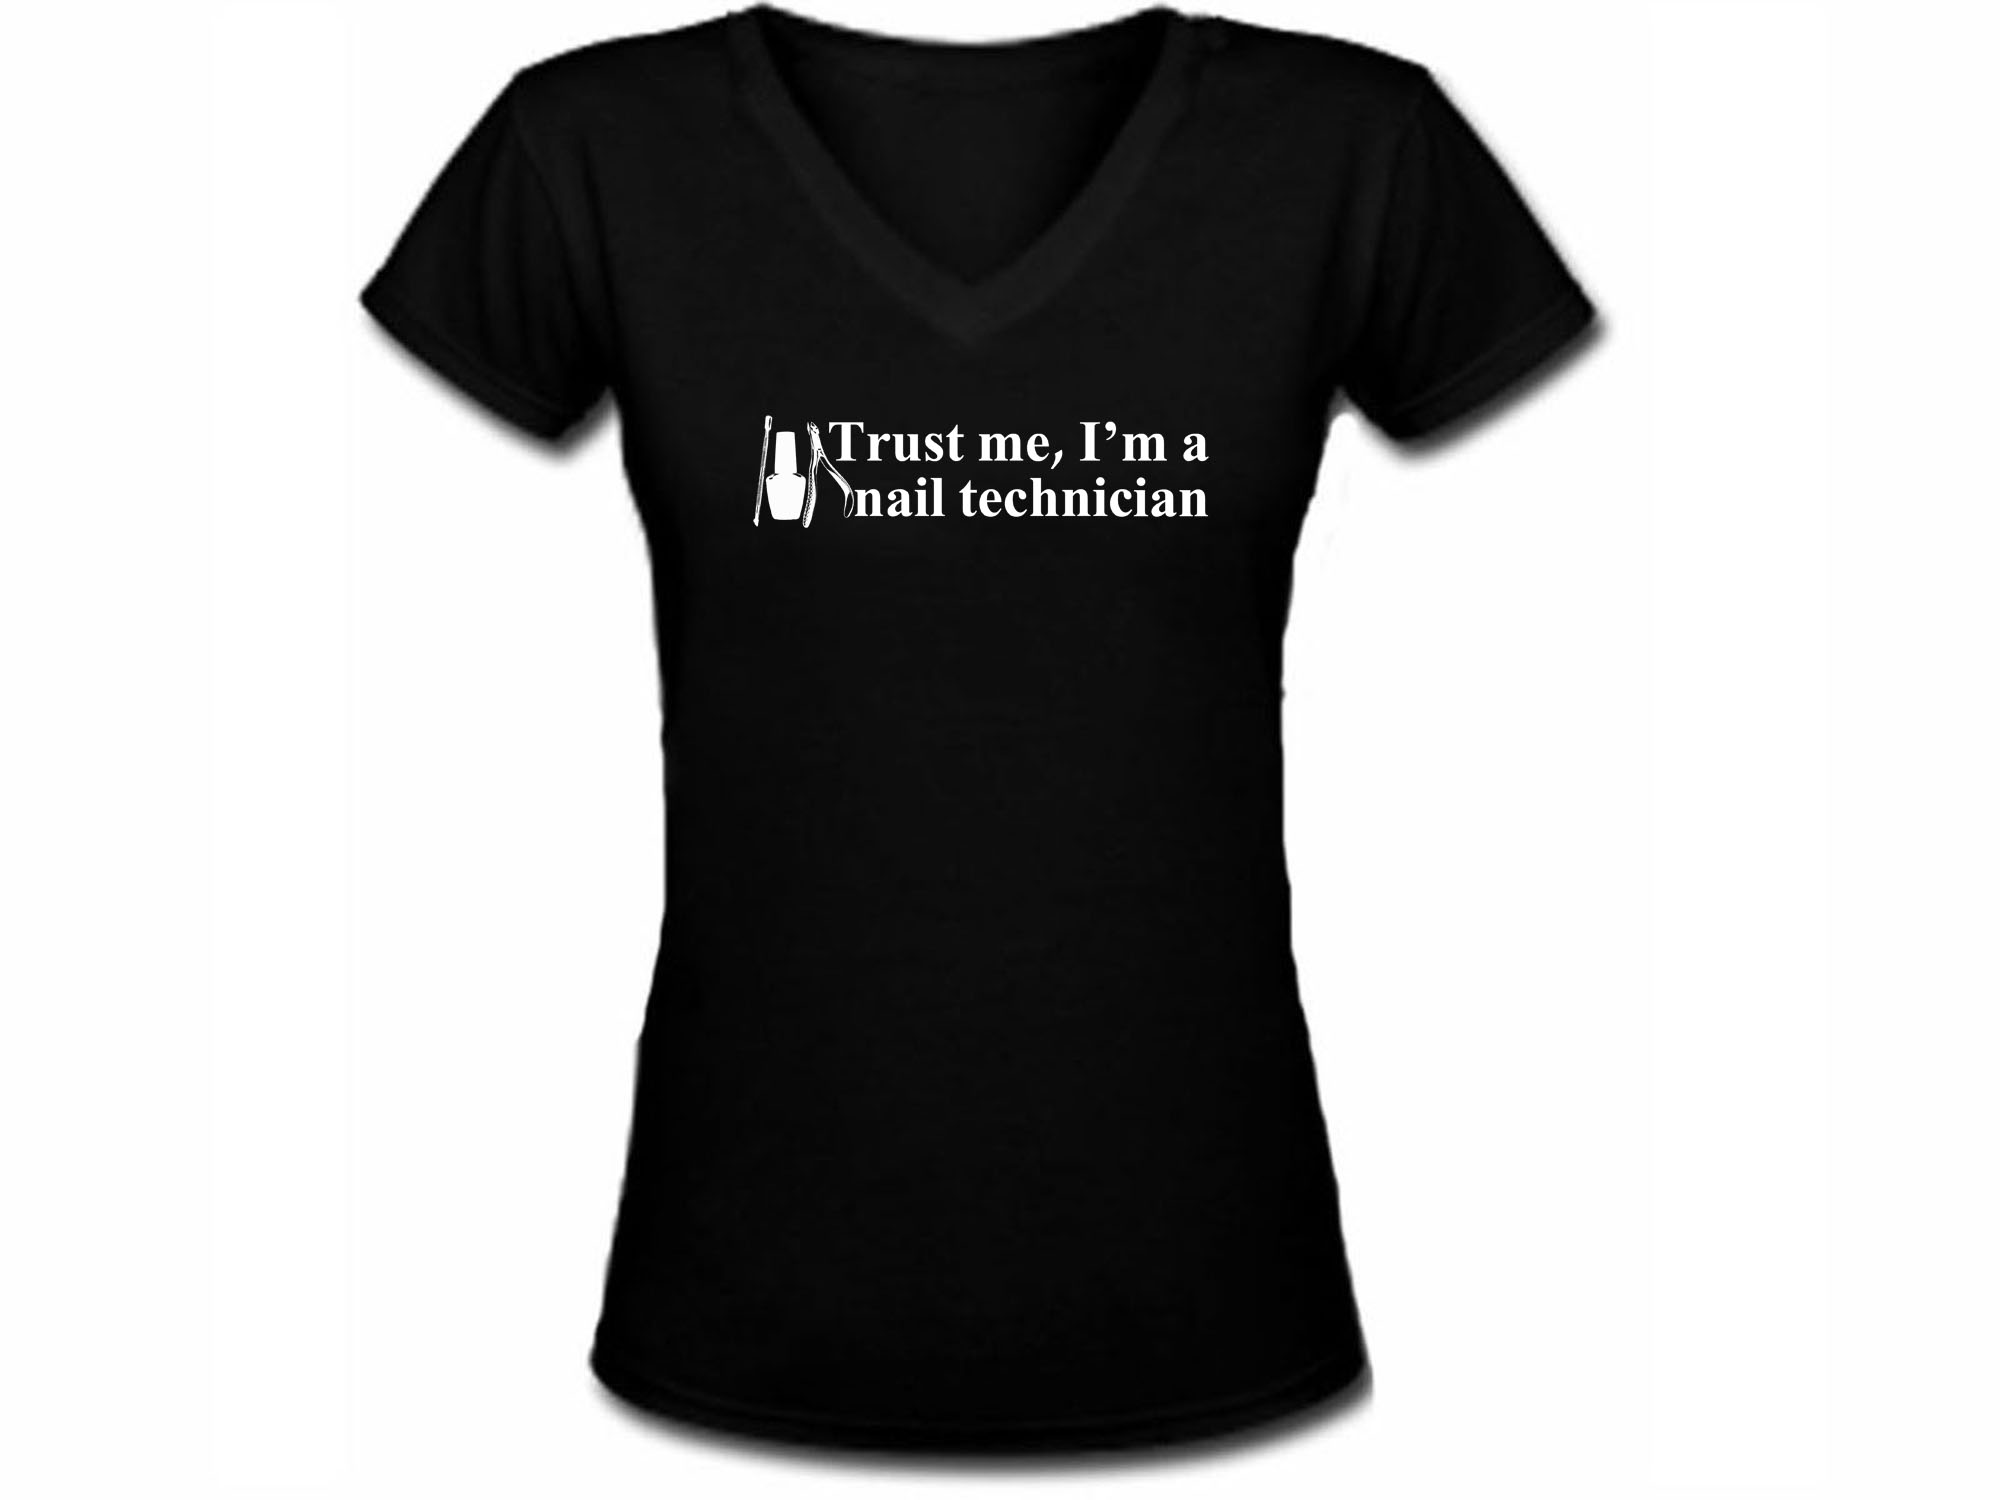 Trust me I'm a Nail technician black t-shirt